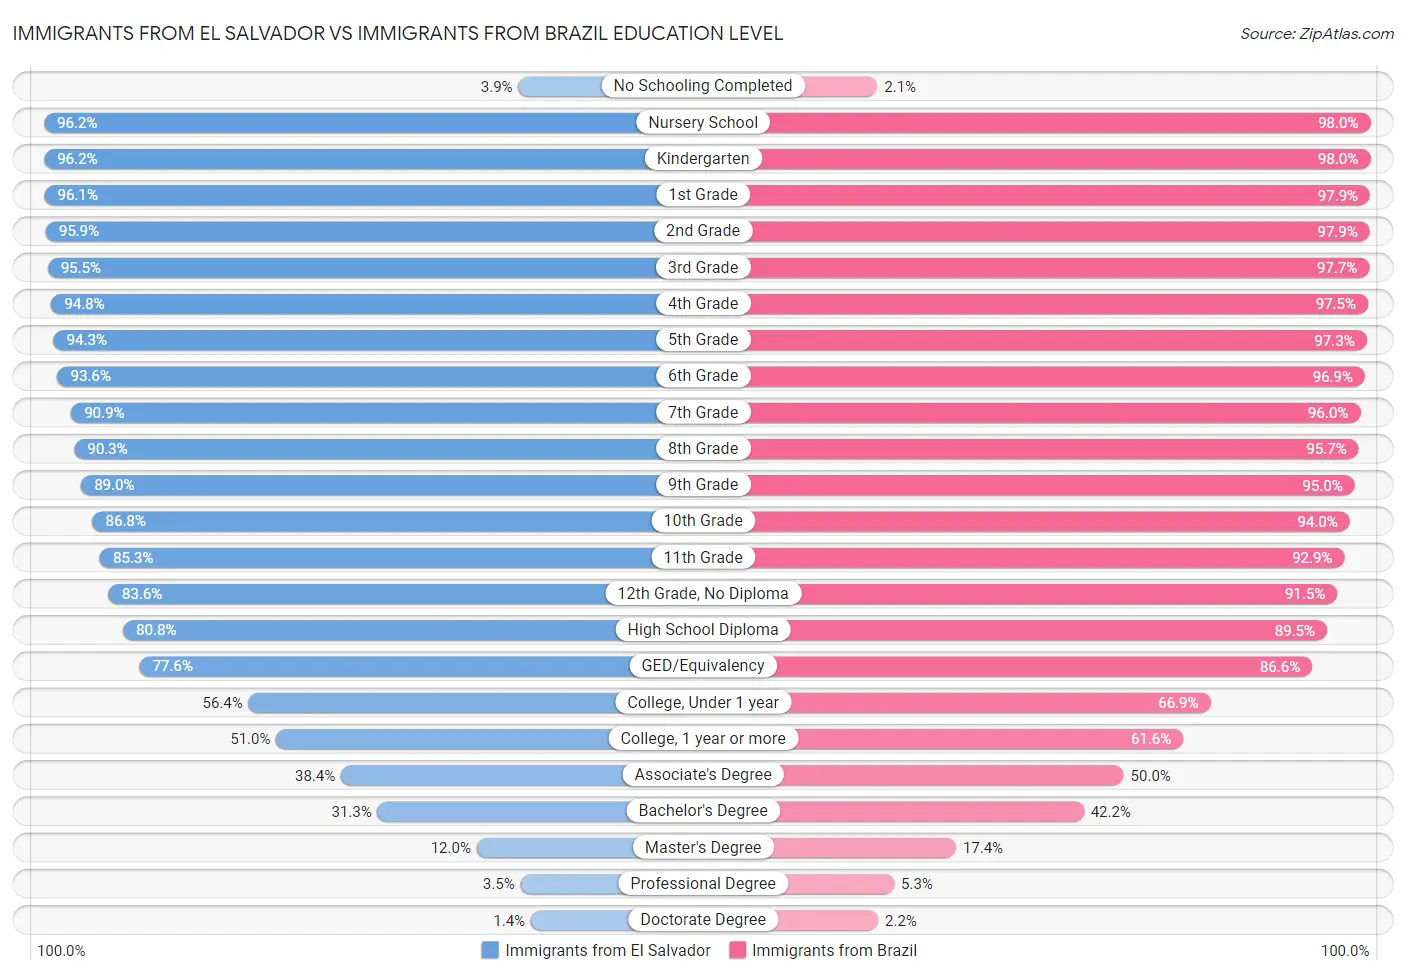 Immigrants from El Salvador vs Immigrants from Brazil Education Level